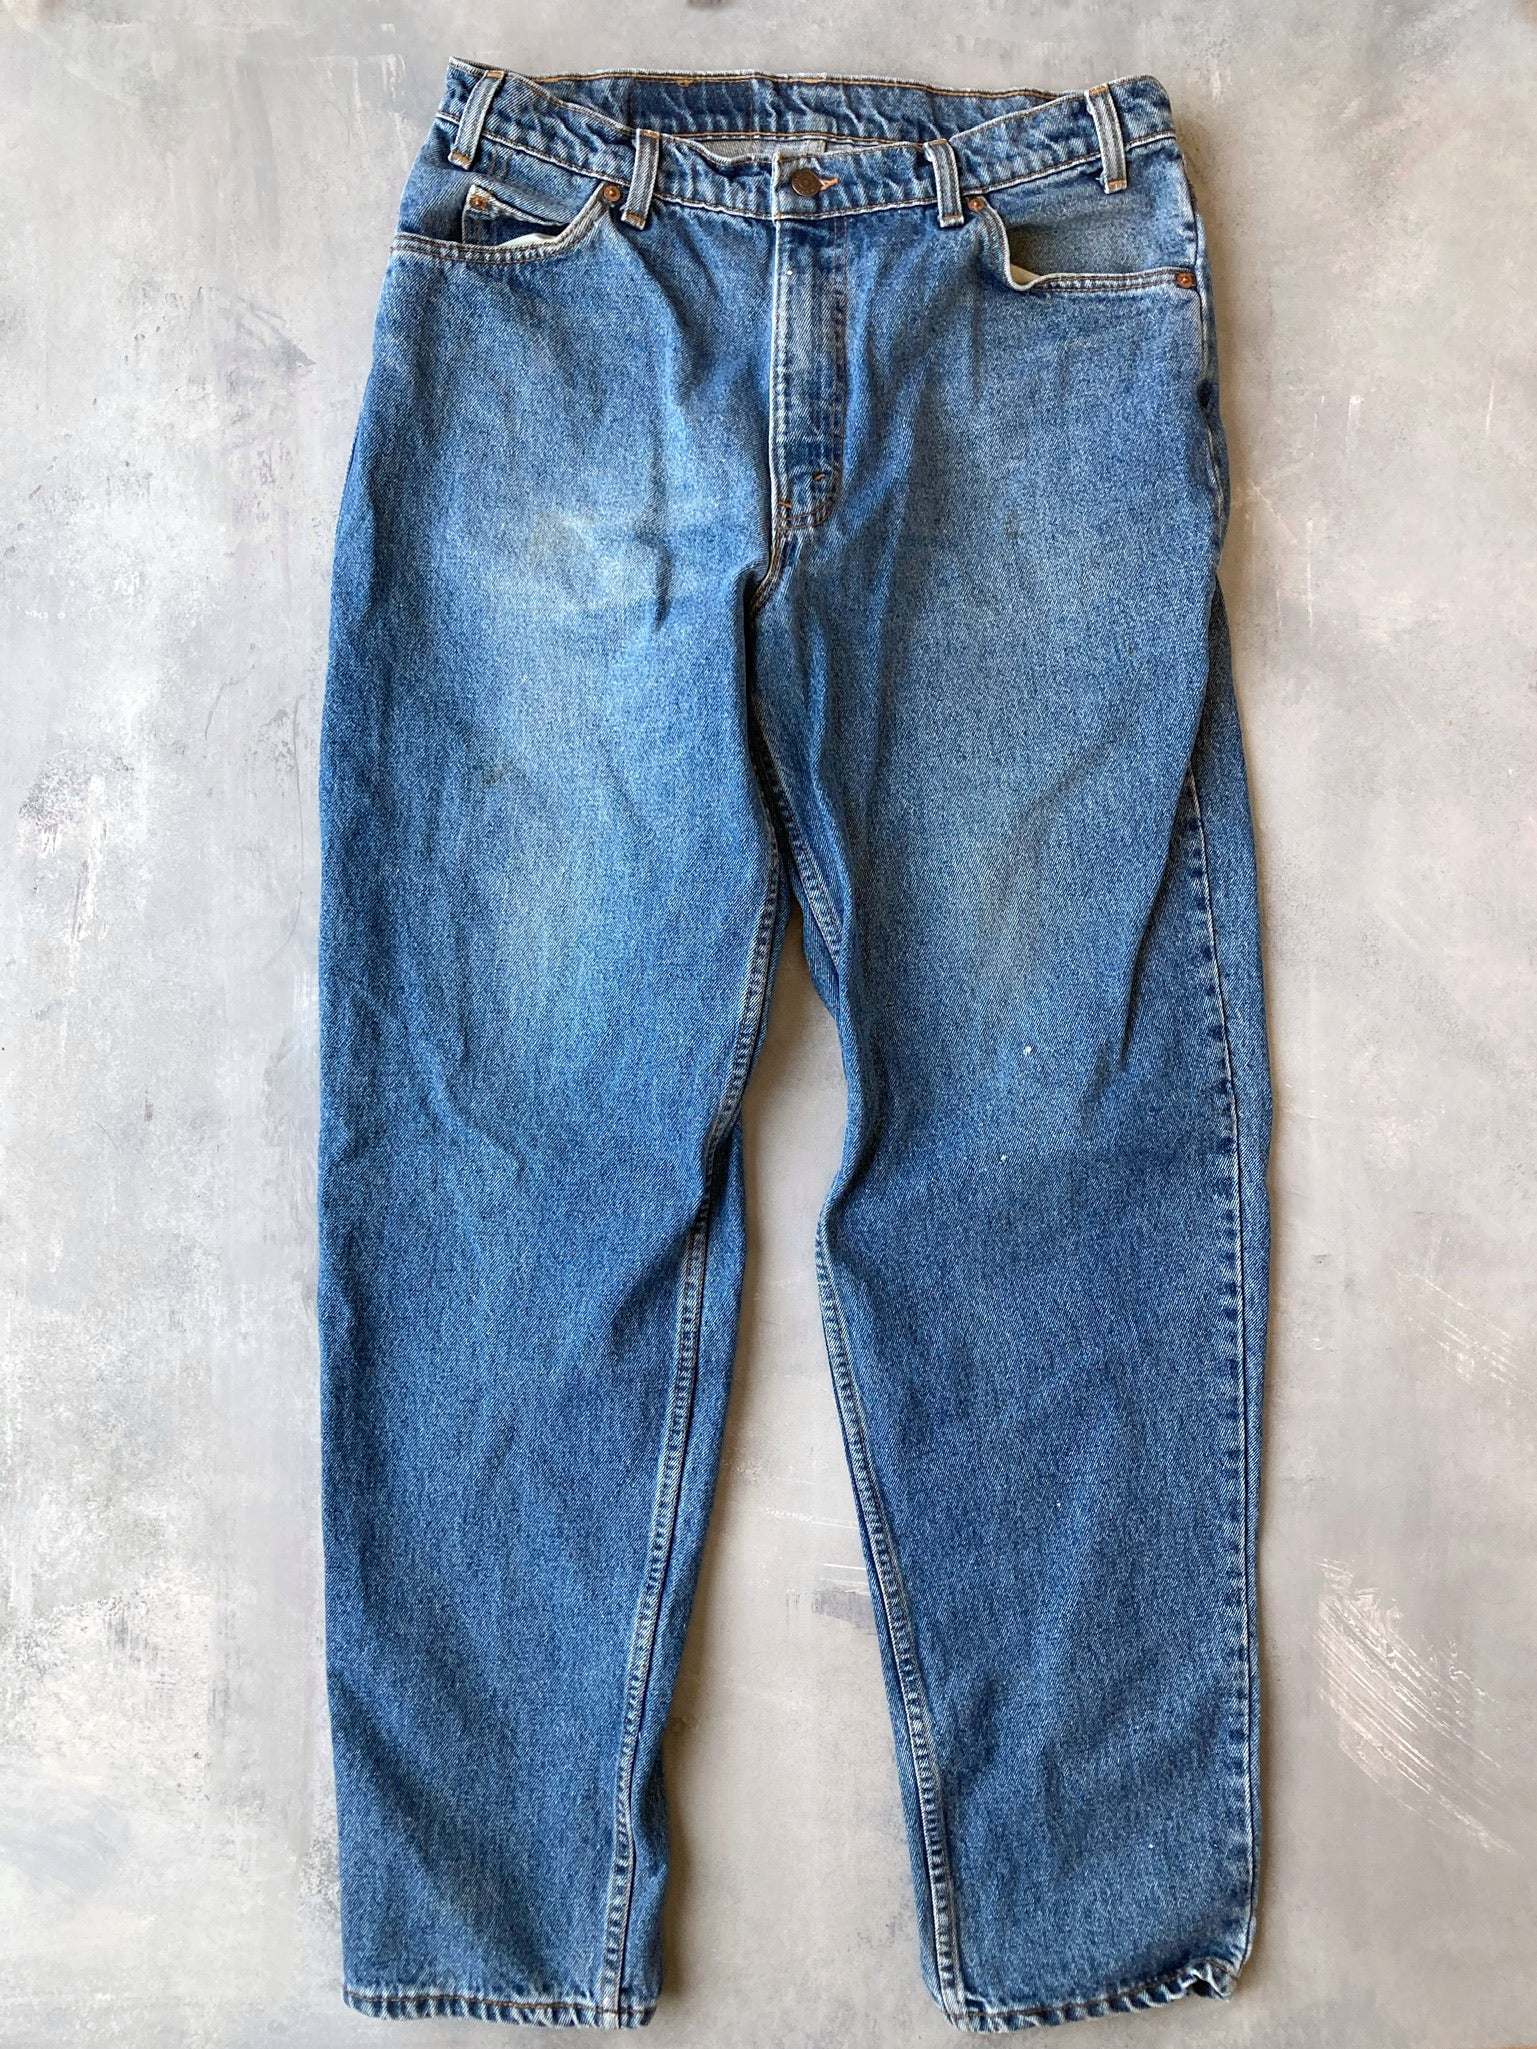 Levi's 560 Jeans Orange Tab 90's - 36x34 – Lot 1 Vintage